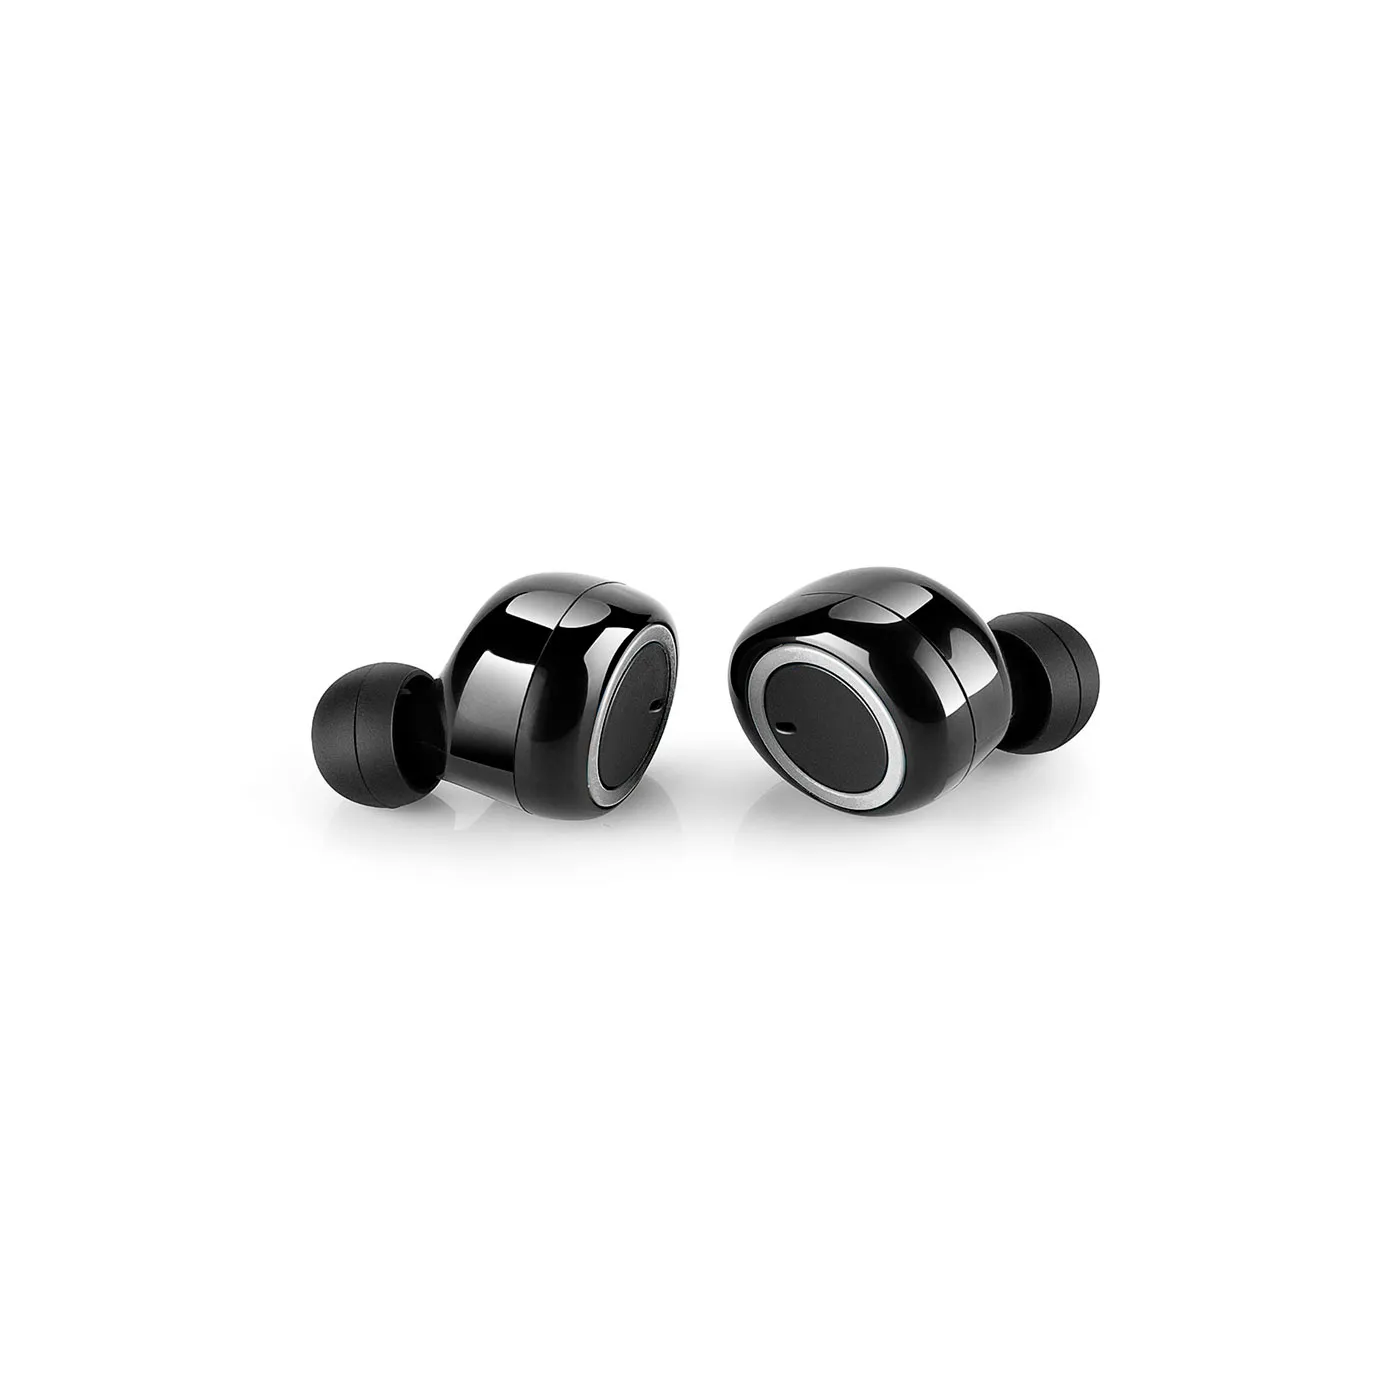 Audífonos XTECH Inalámbricos Bluetooth In Ear TWS XTH-700 Negro